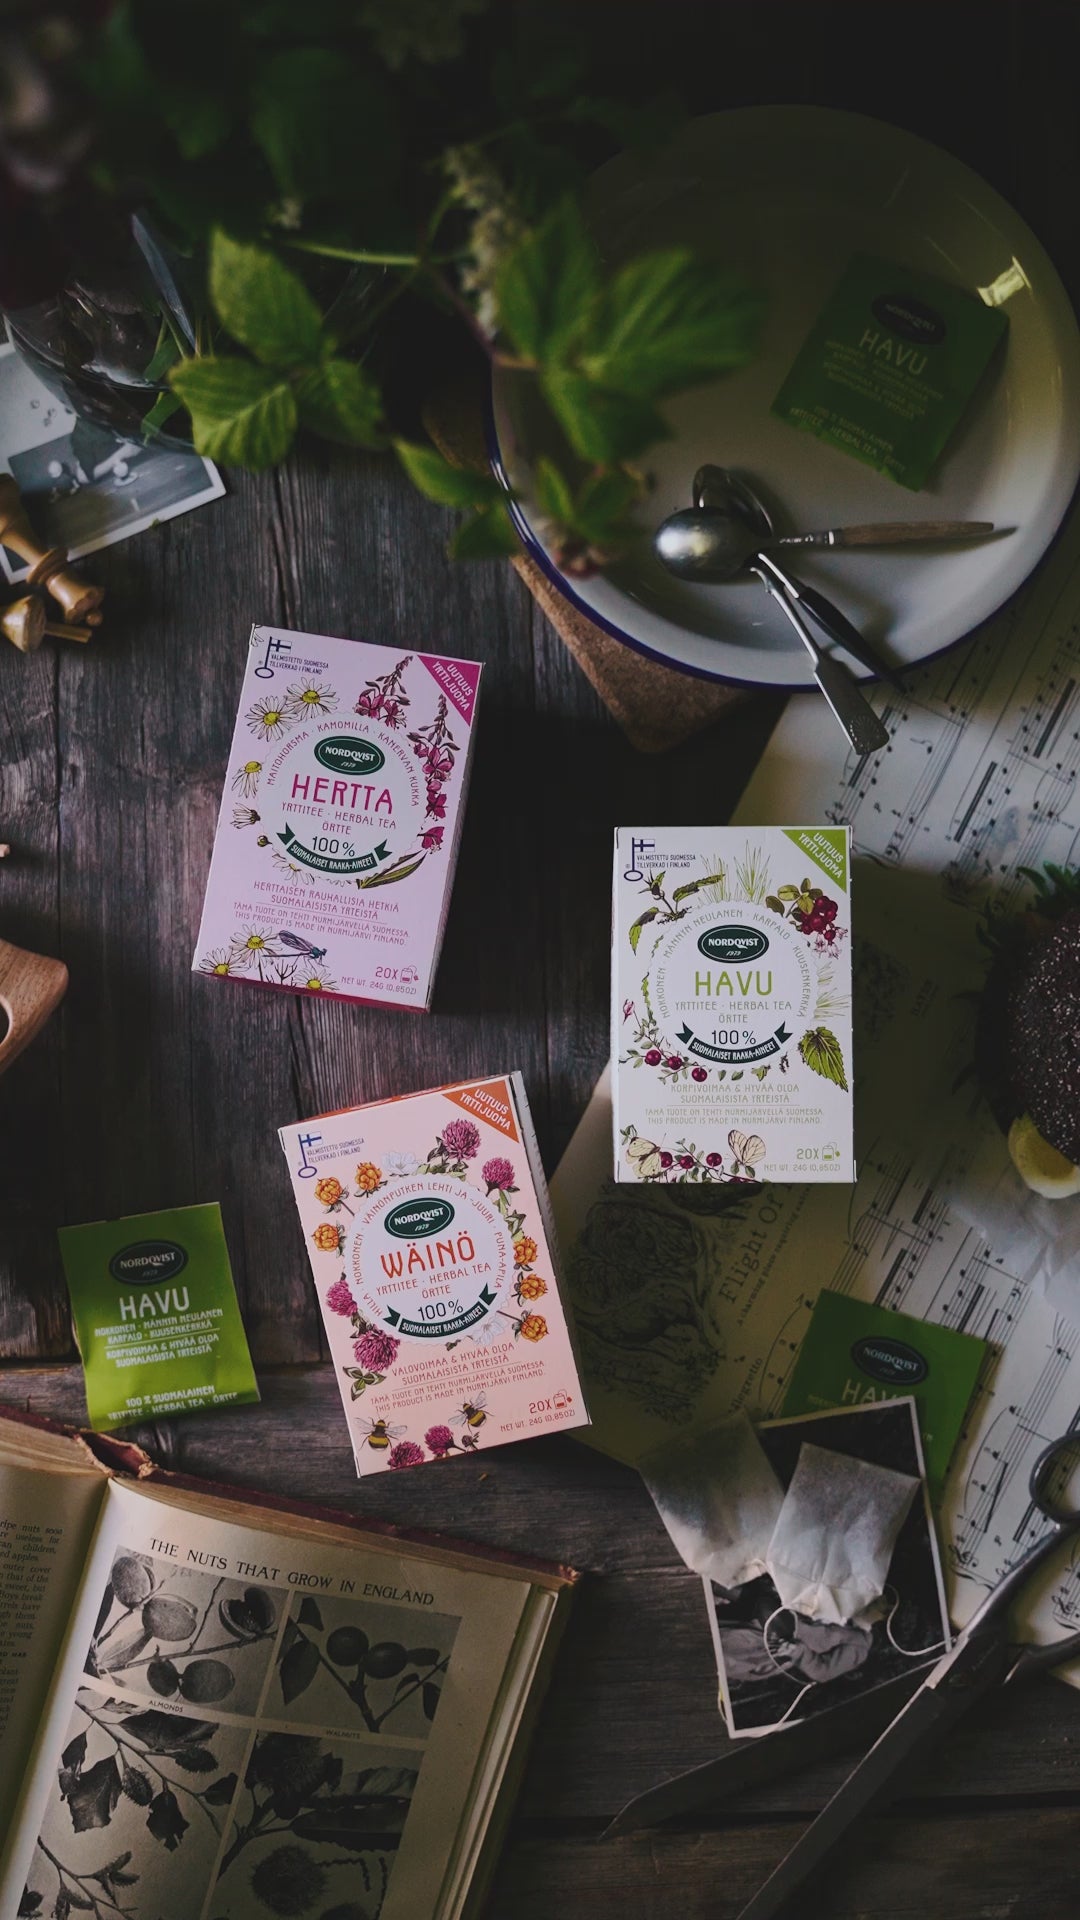 HAVU pure herbal tea grown in Finland NEW